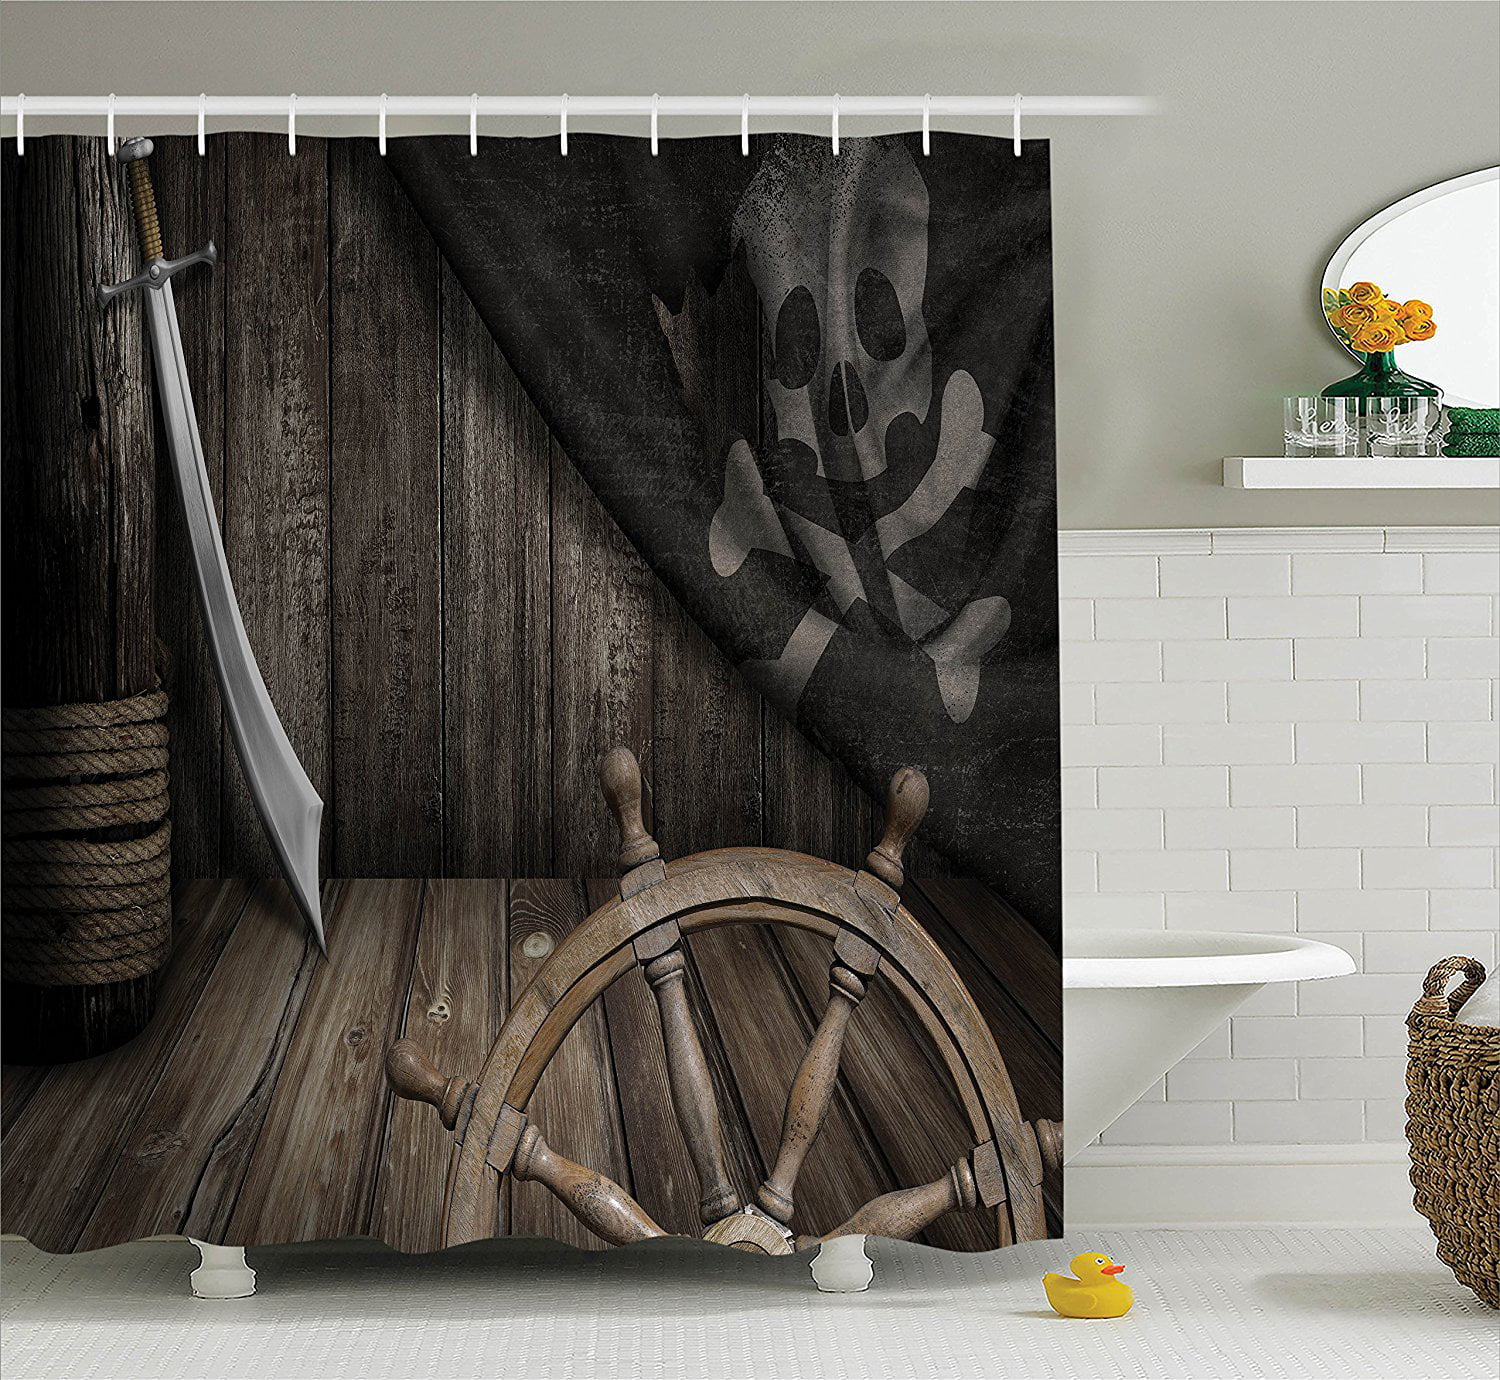 Details about   Leopard Art Shower Curtain Bathroom Plastic Waterproof Mildew Splash Resistant  